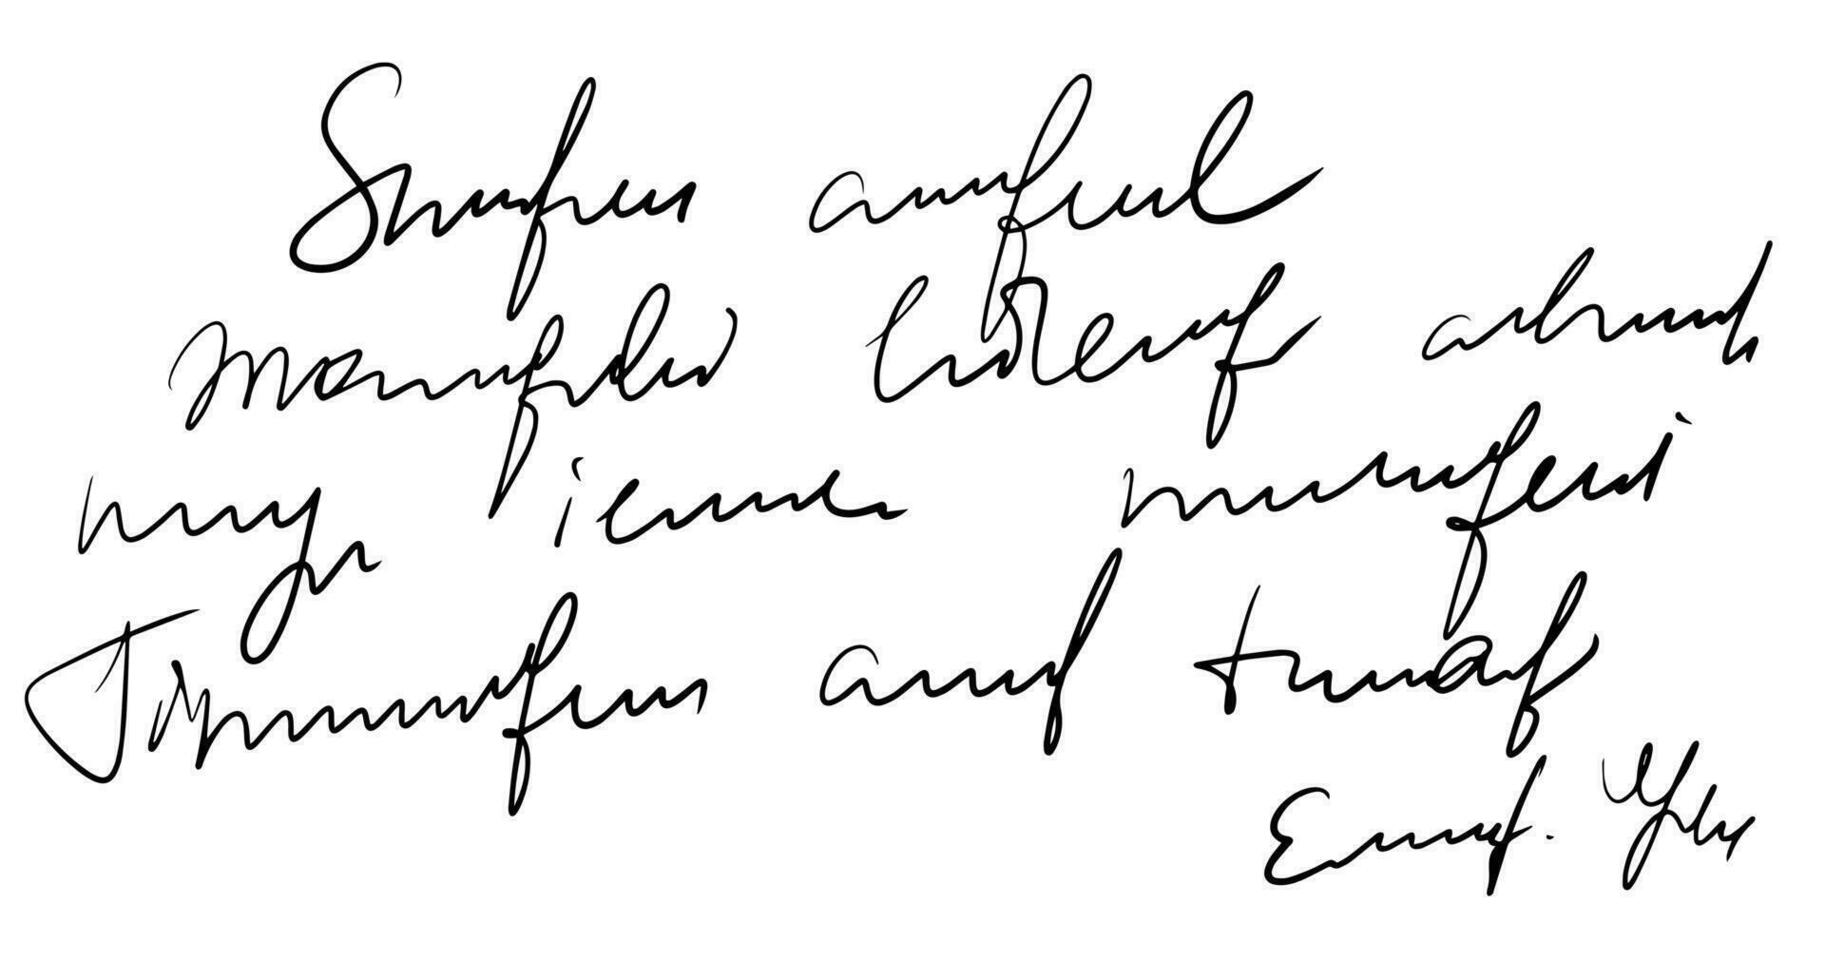 Unreadable handwritten text vector